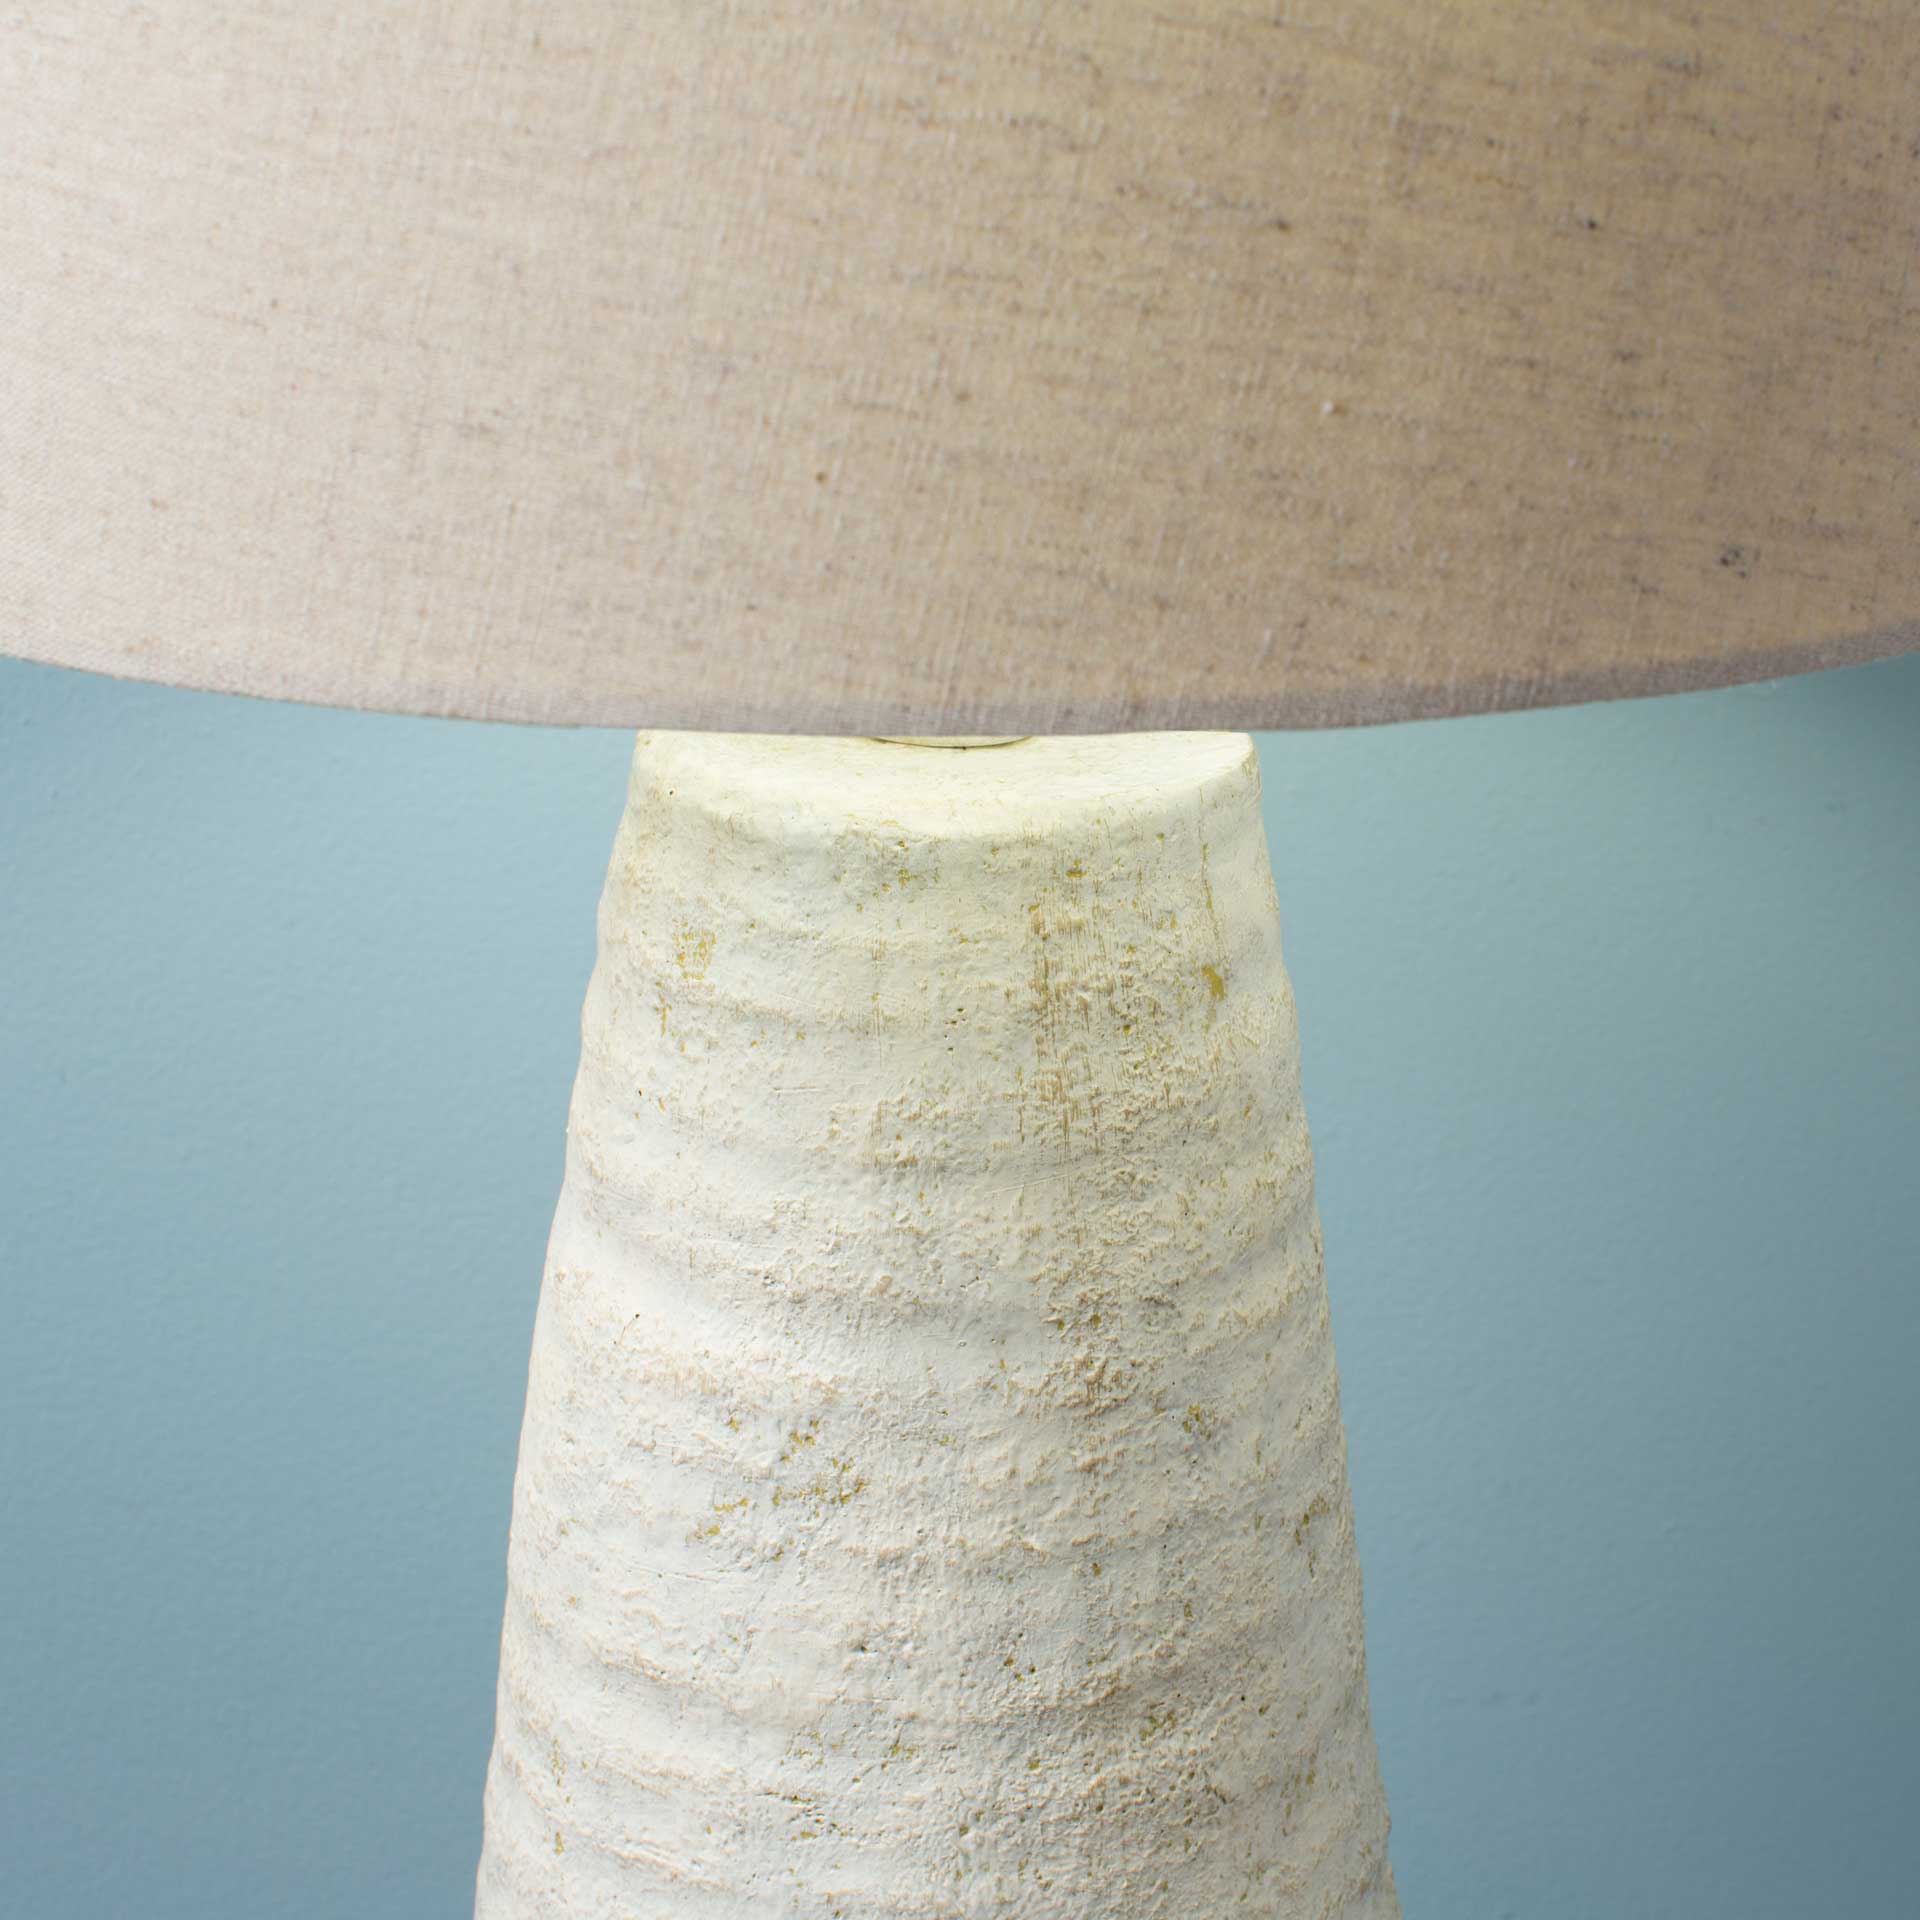 Morello Table Lamp Ivory/White/Natural